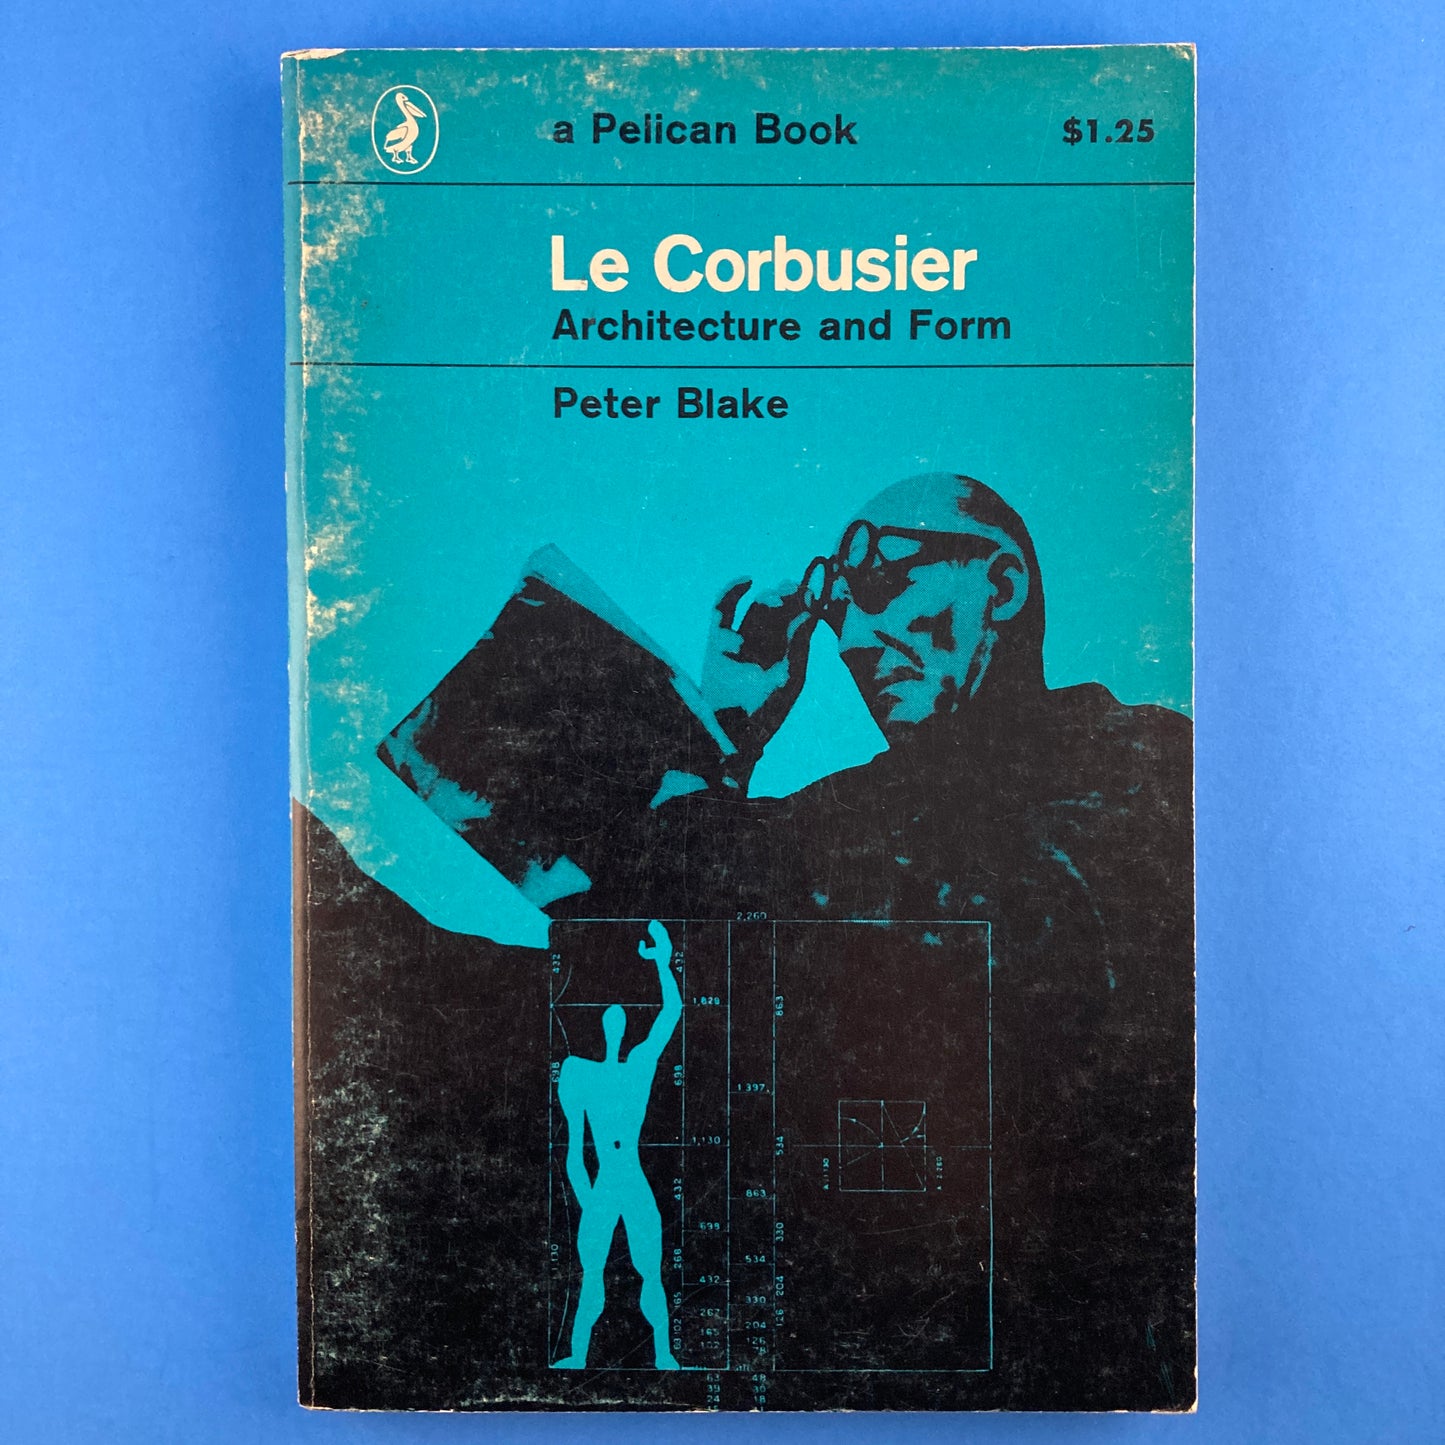 Le Corbusier: Architecture and Form